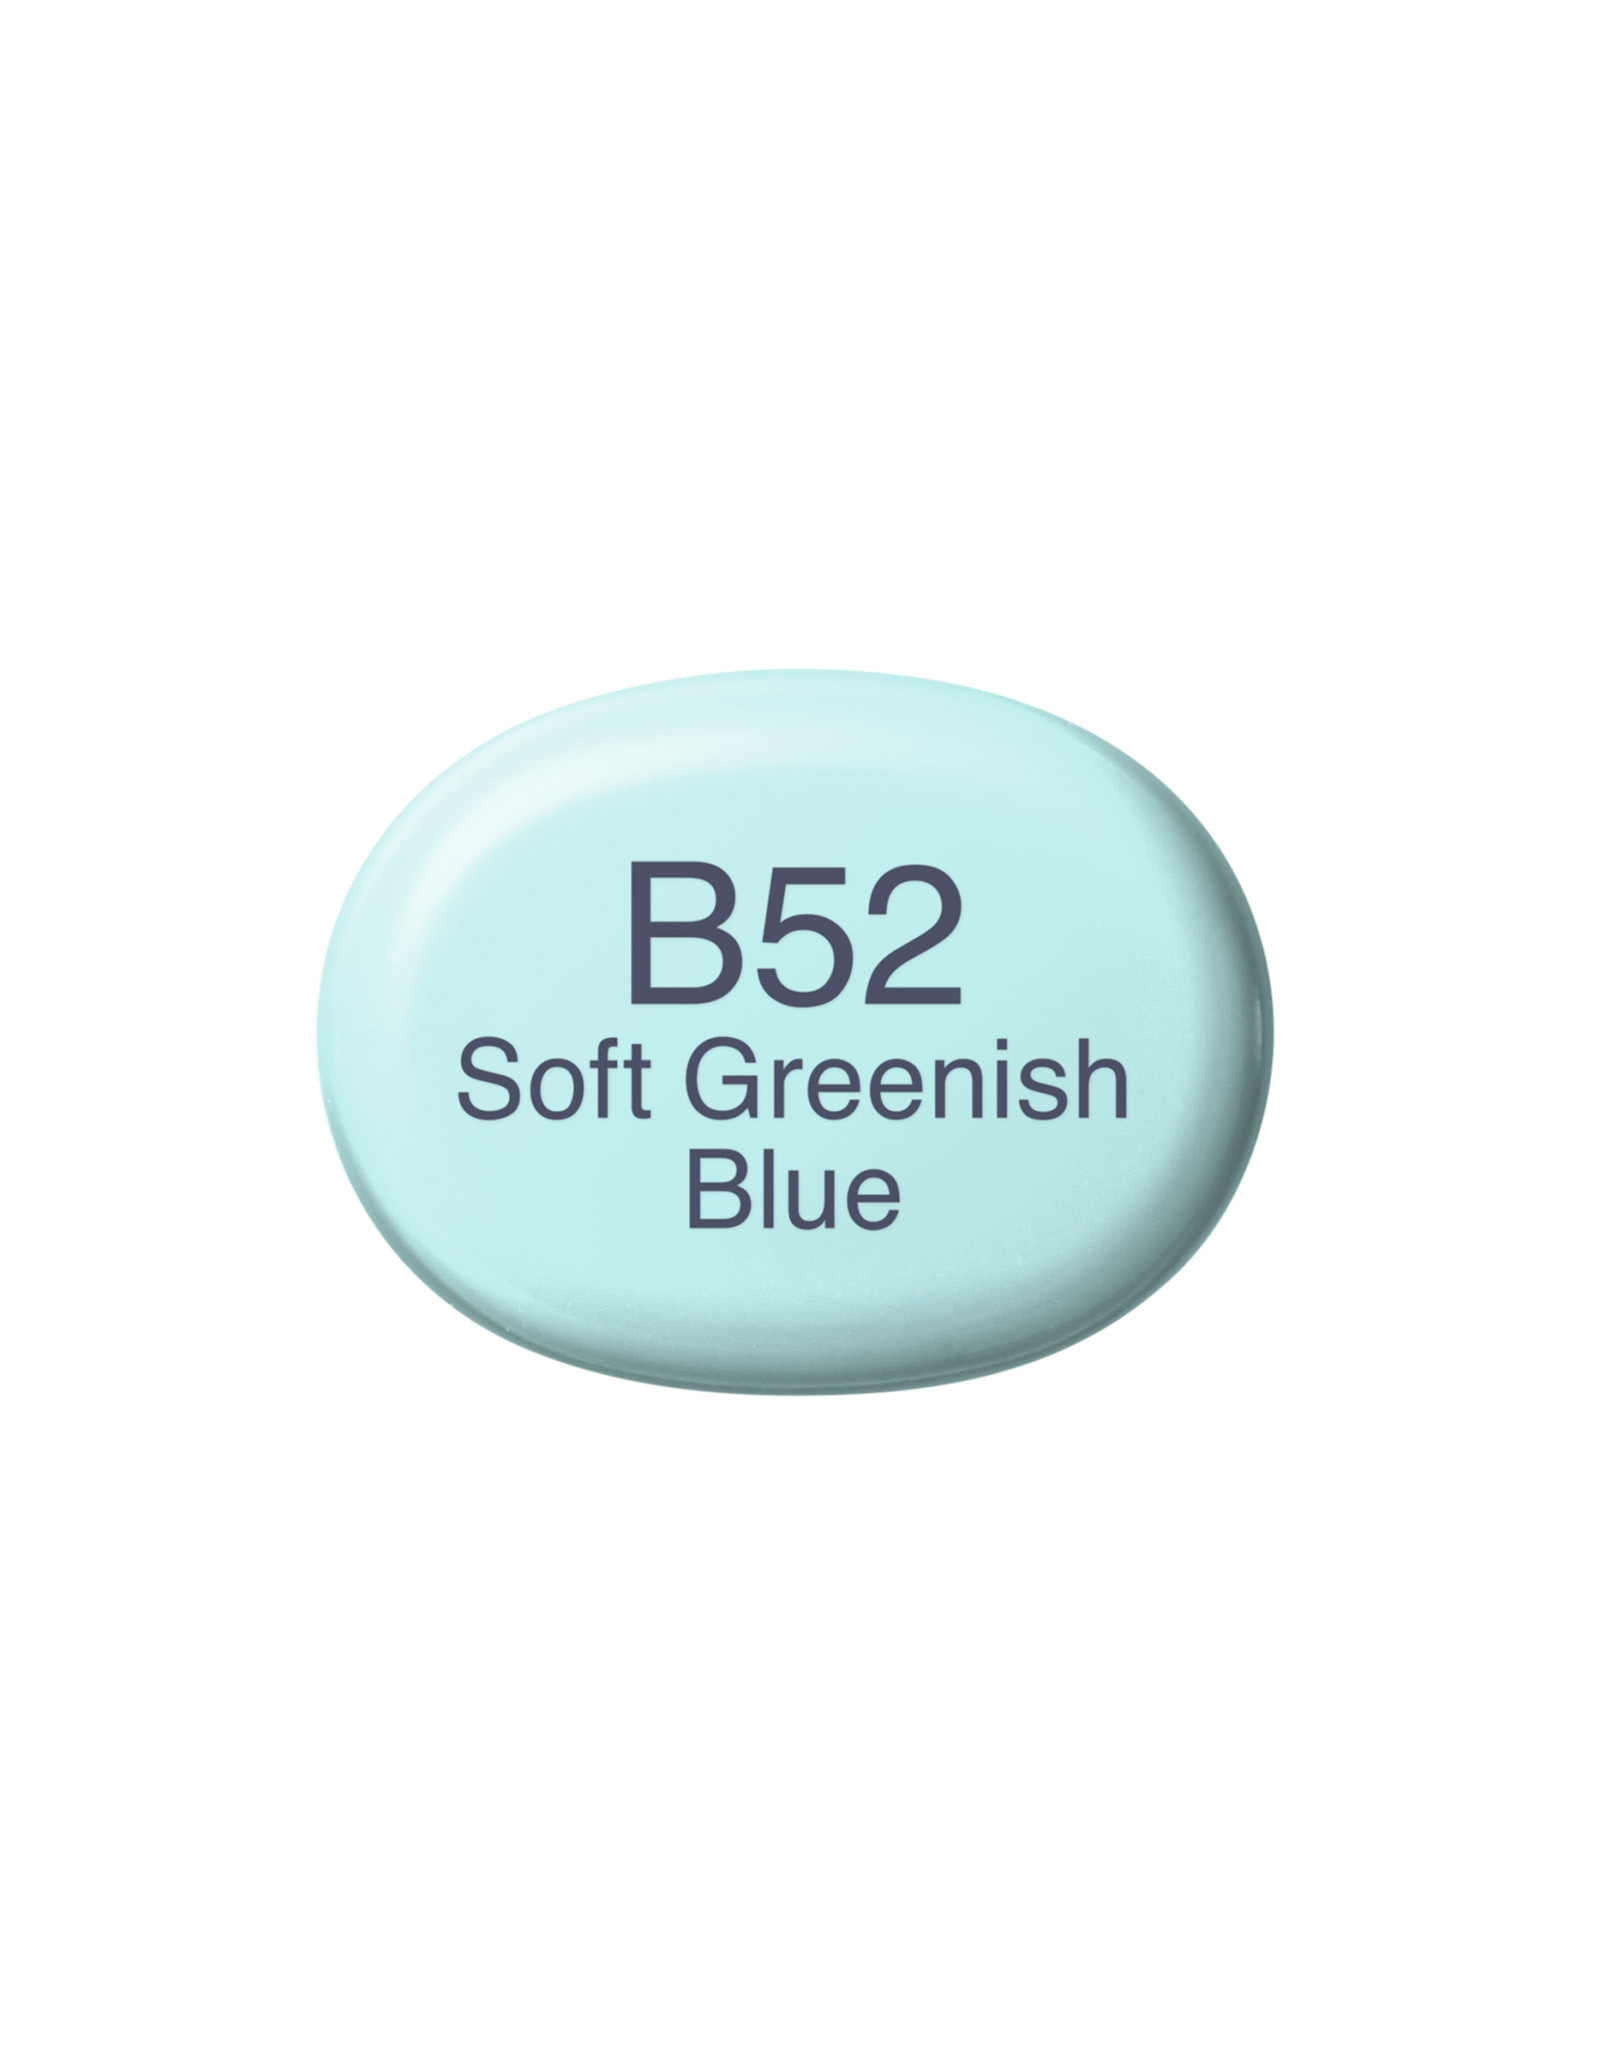 COPIC COPIC Sketch Marker B52 Soft Greenish Blue